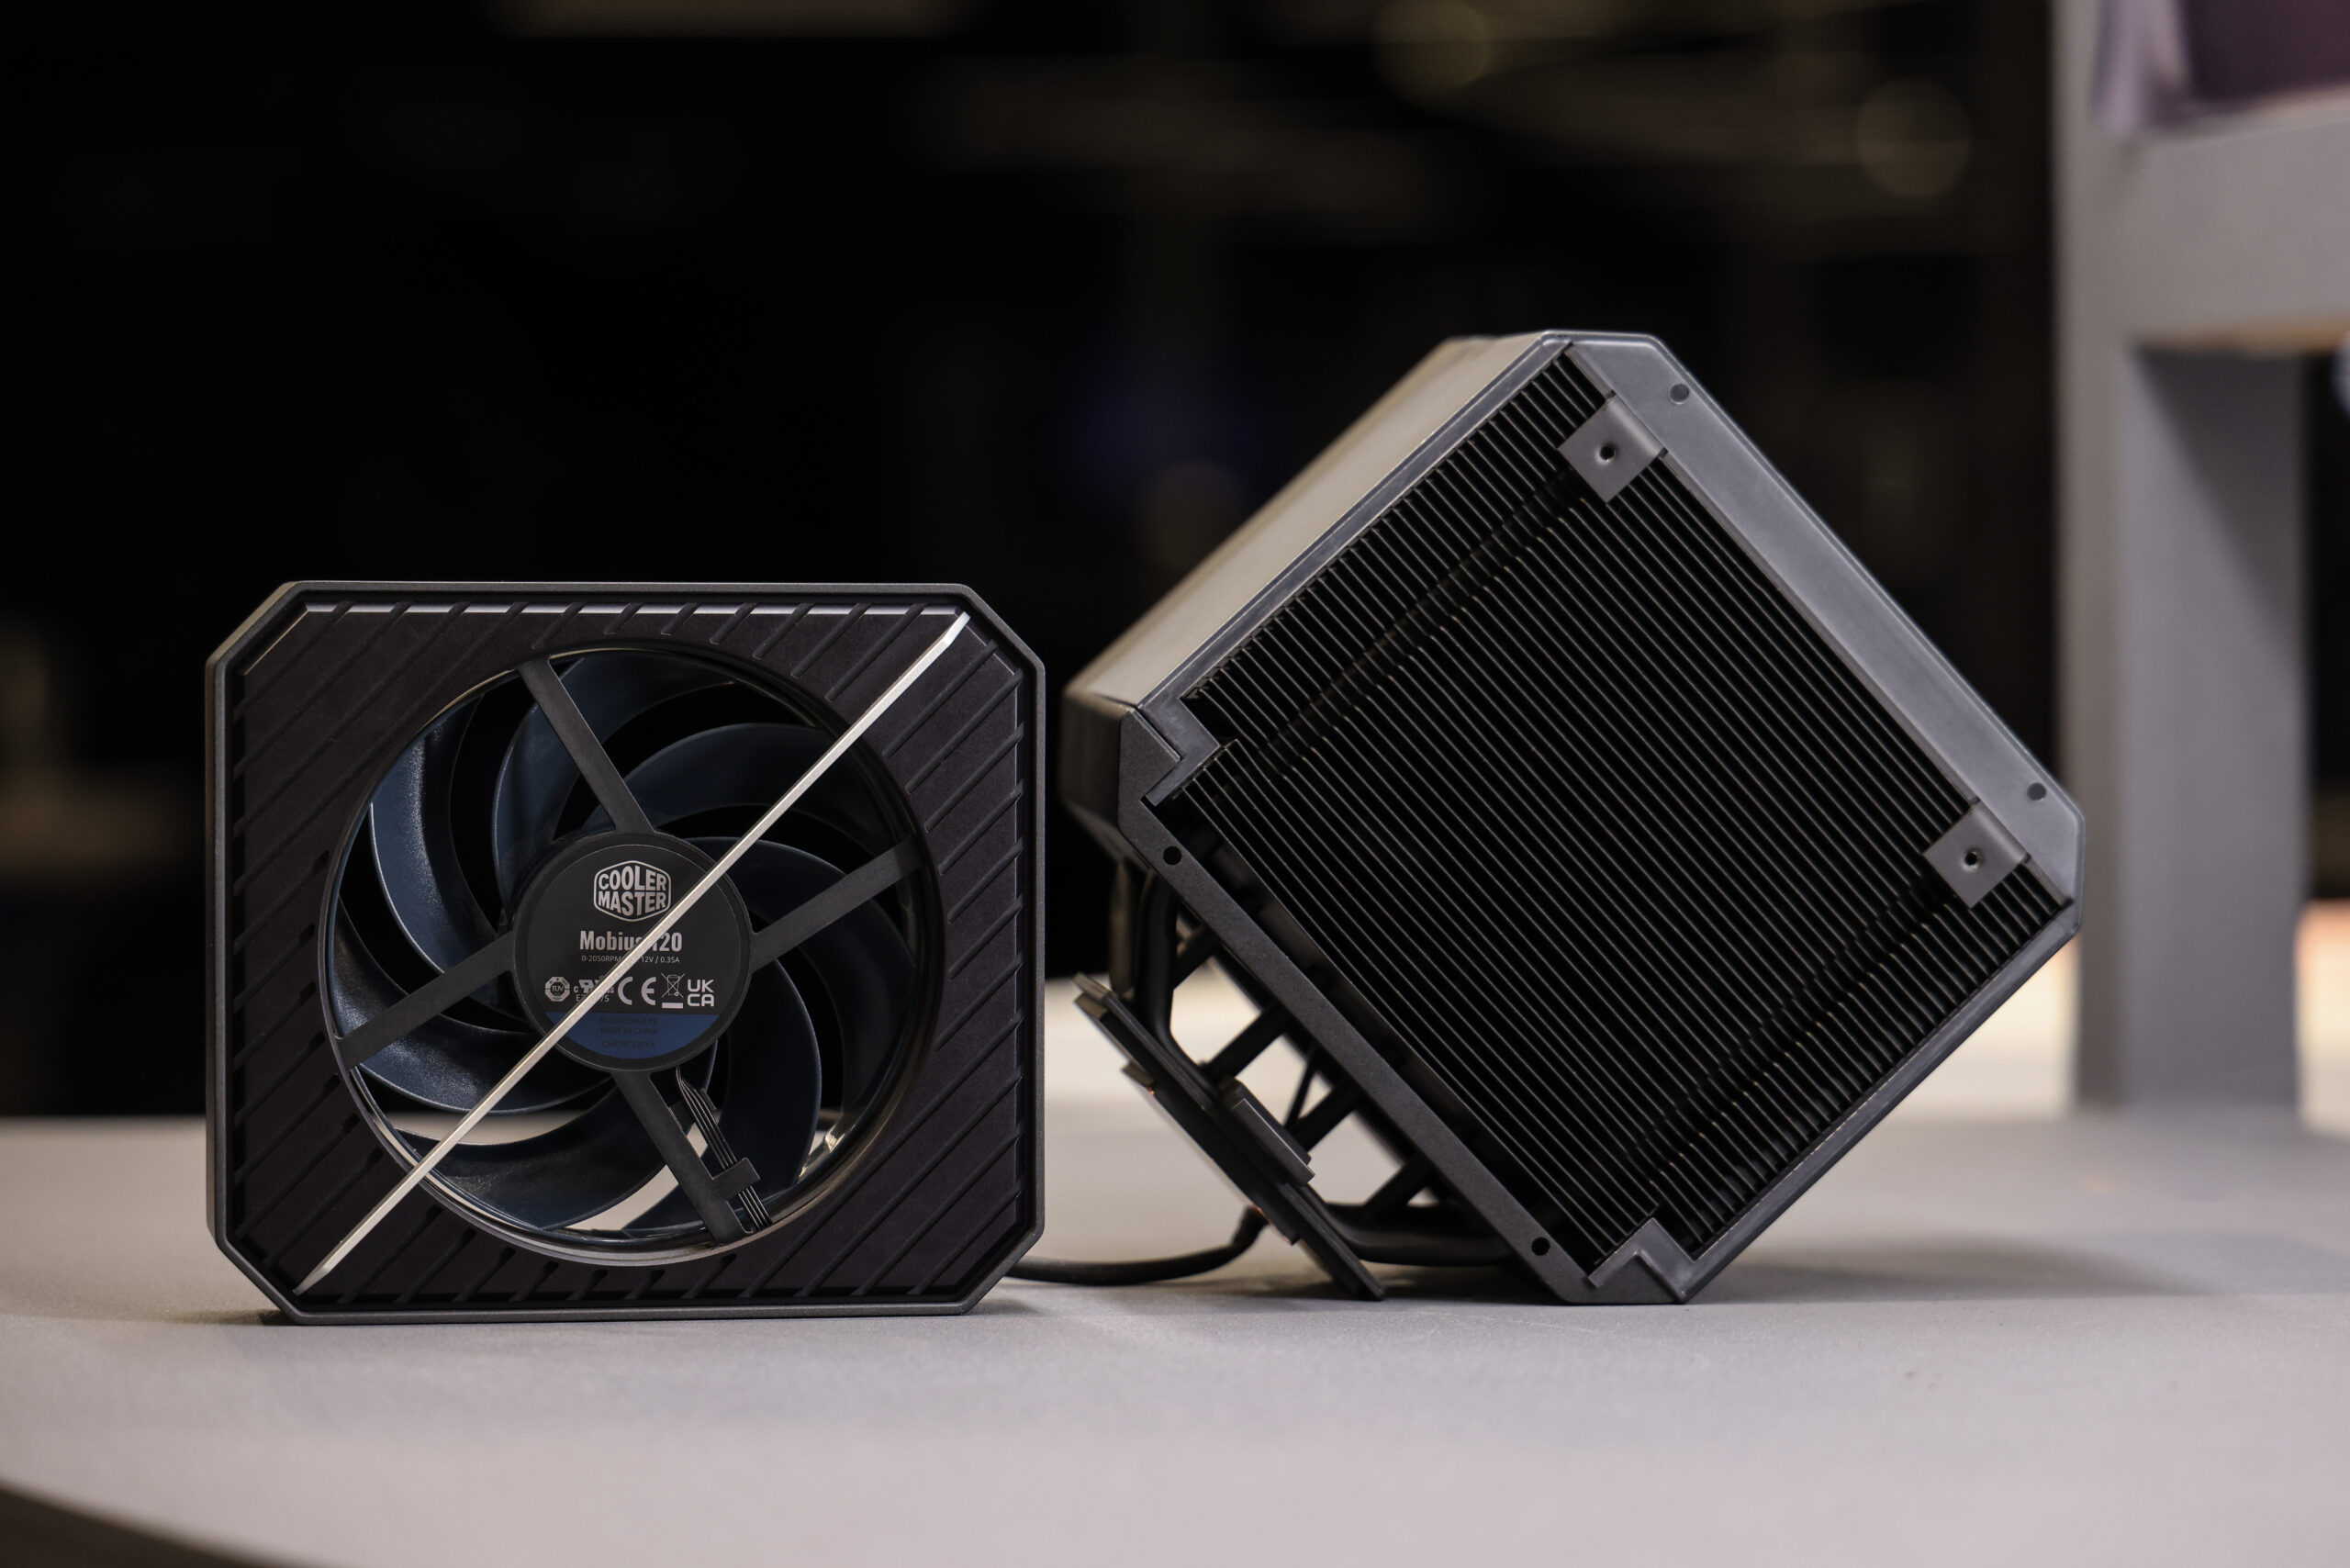 Cooler Master launches trio of MasterAir CPU coolers